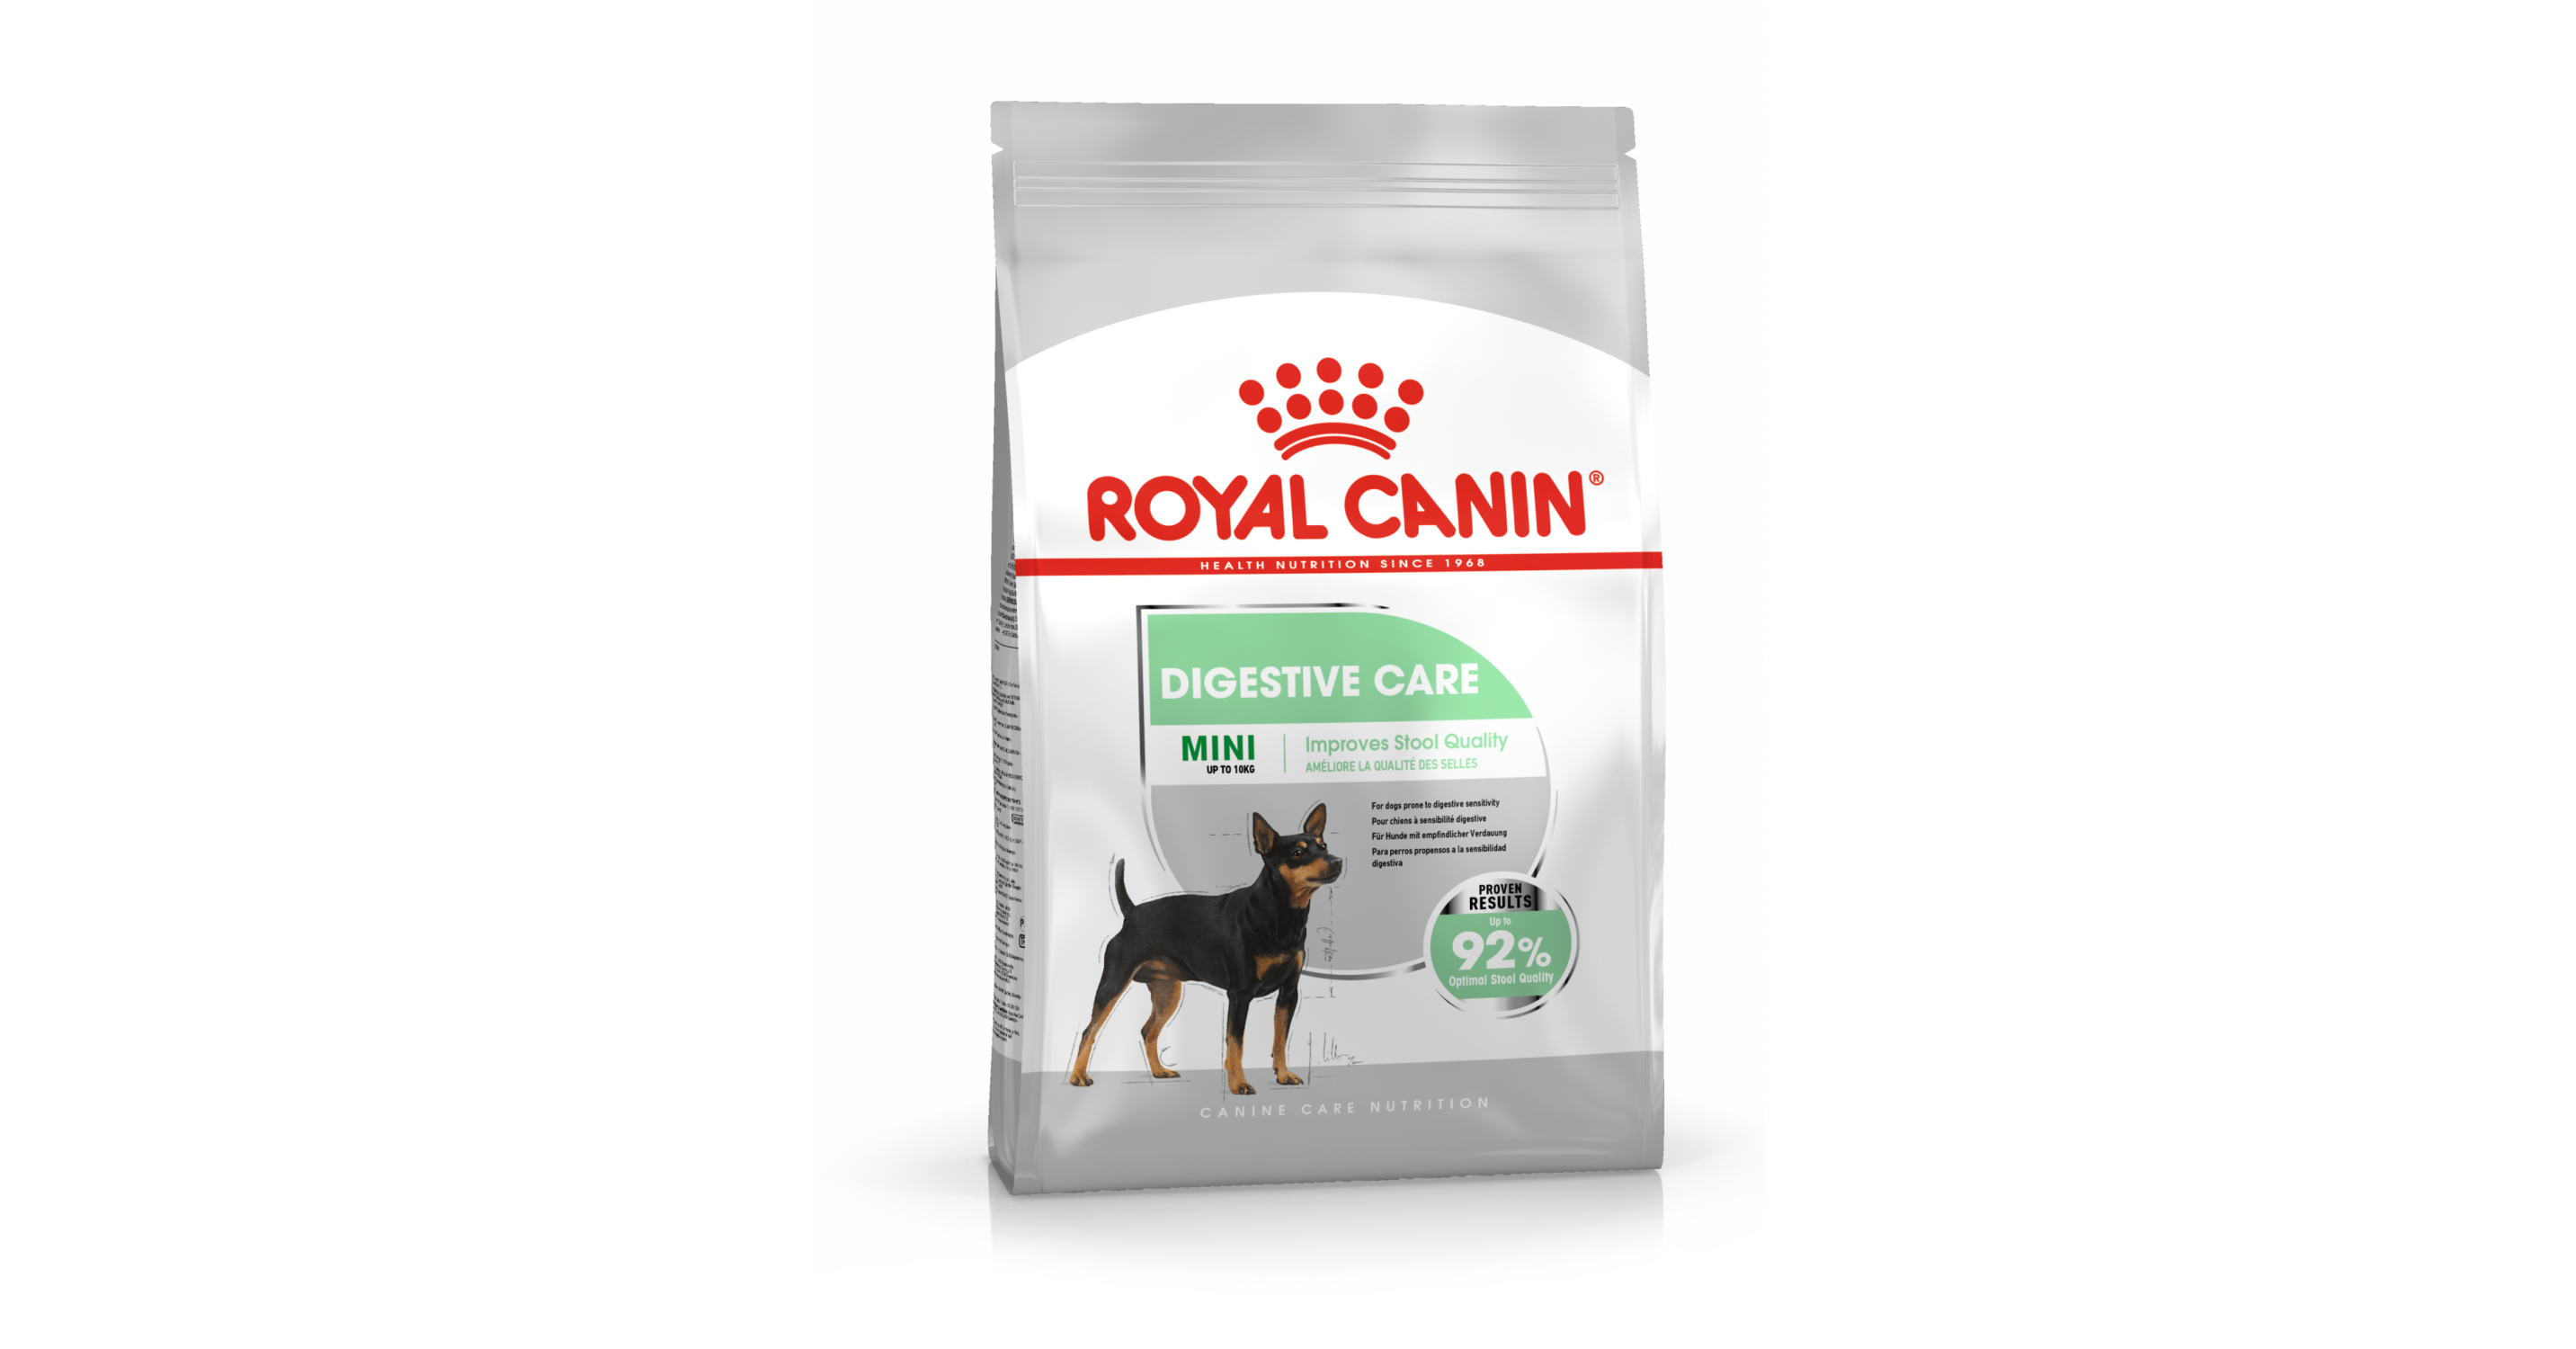 Royal Canin Digestive Care Cat Food 10kg